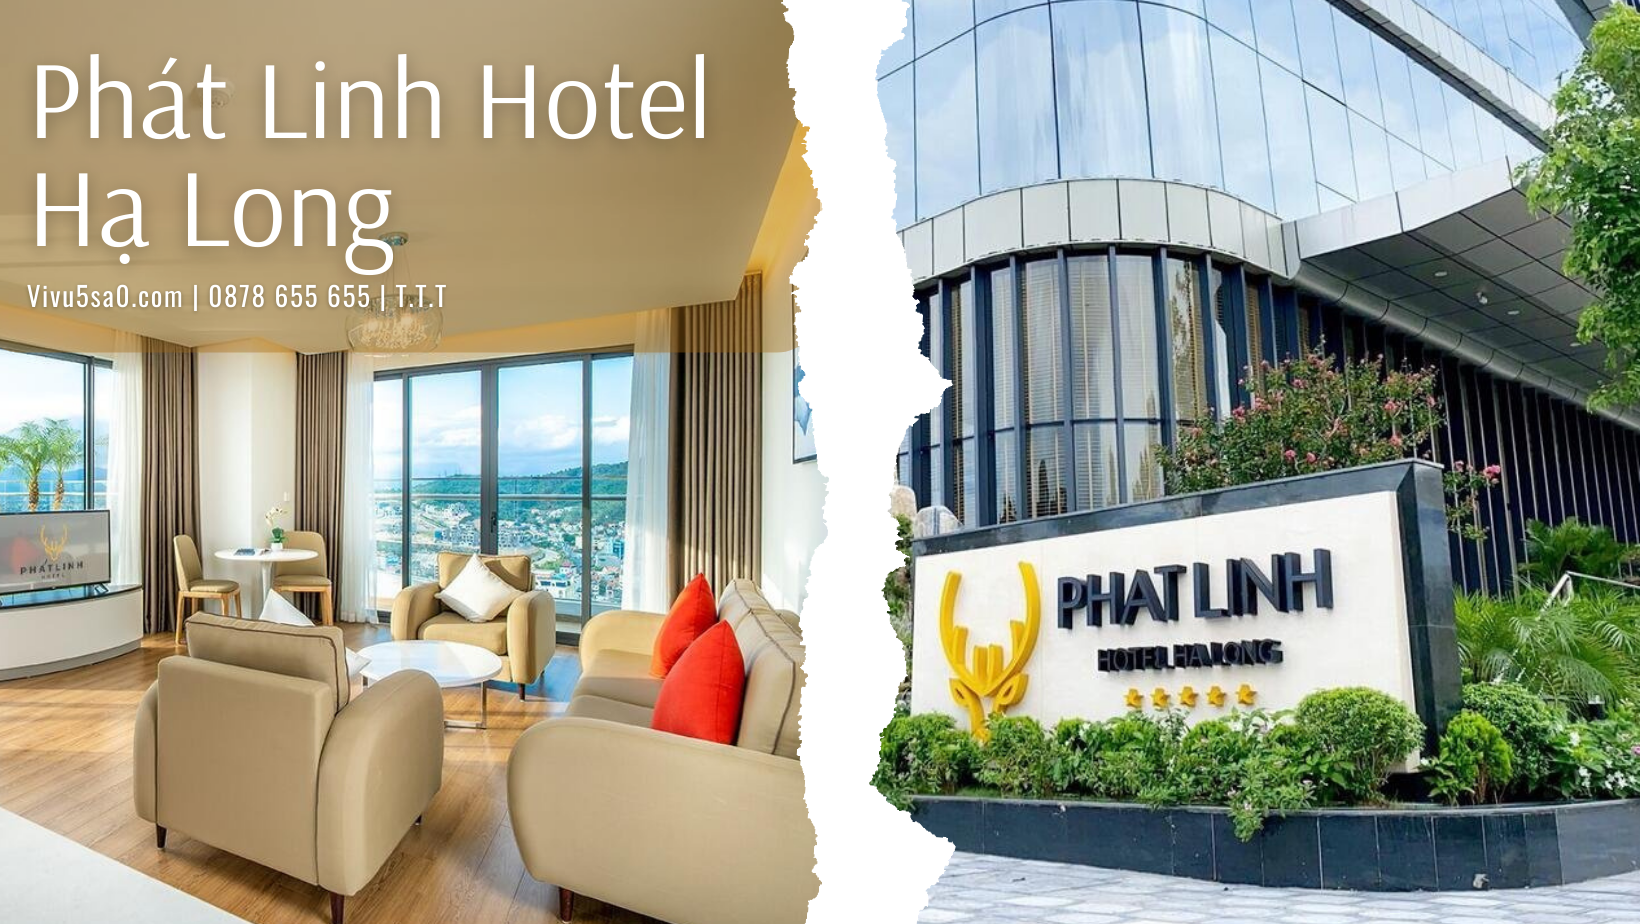 Phát Linh Hotel Hạ long | Vivu5sao.com